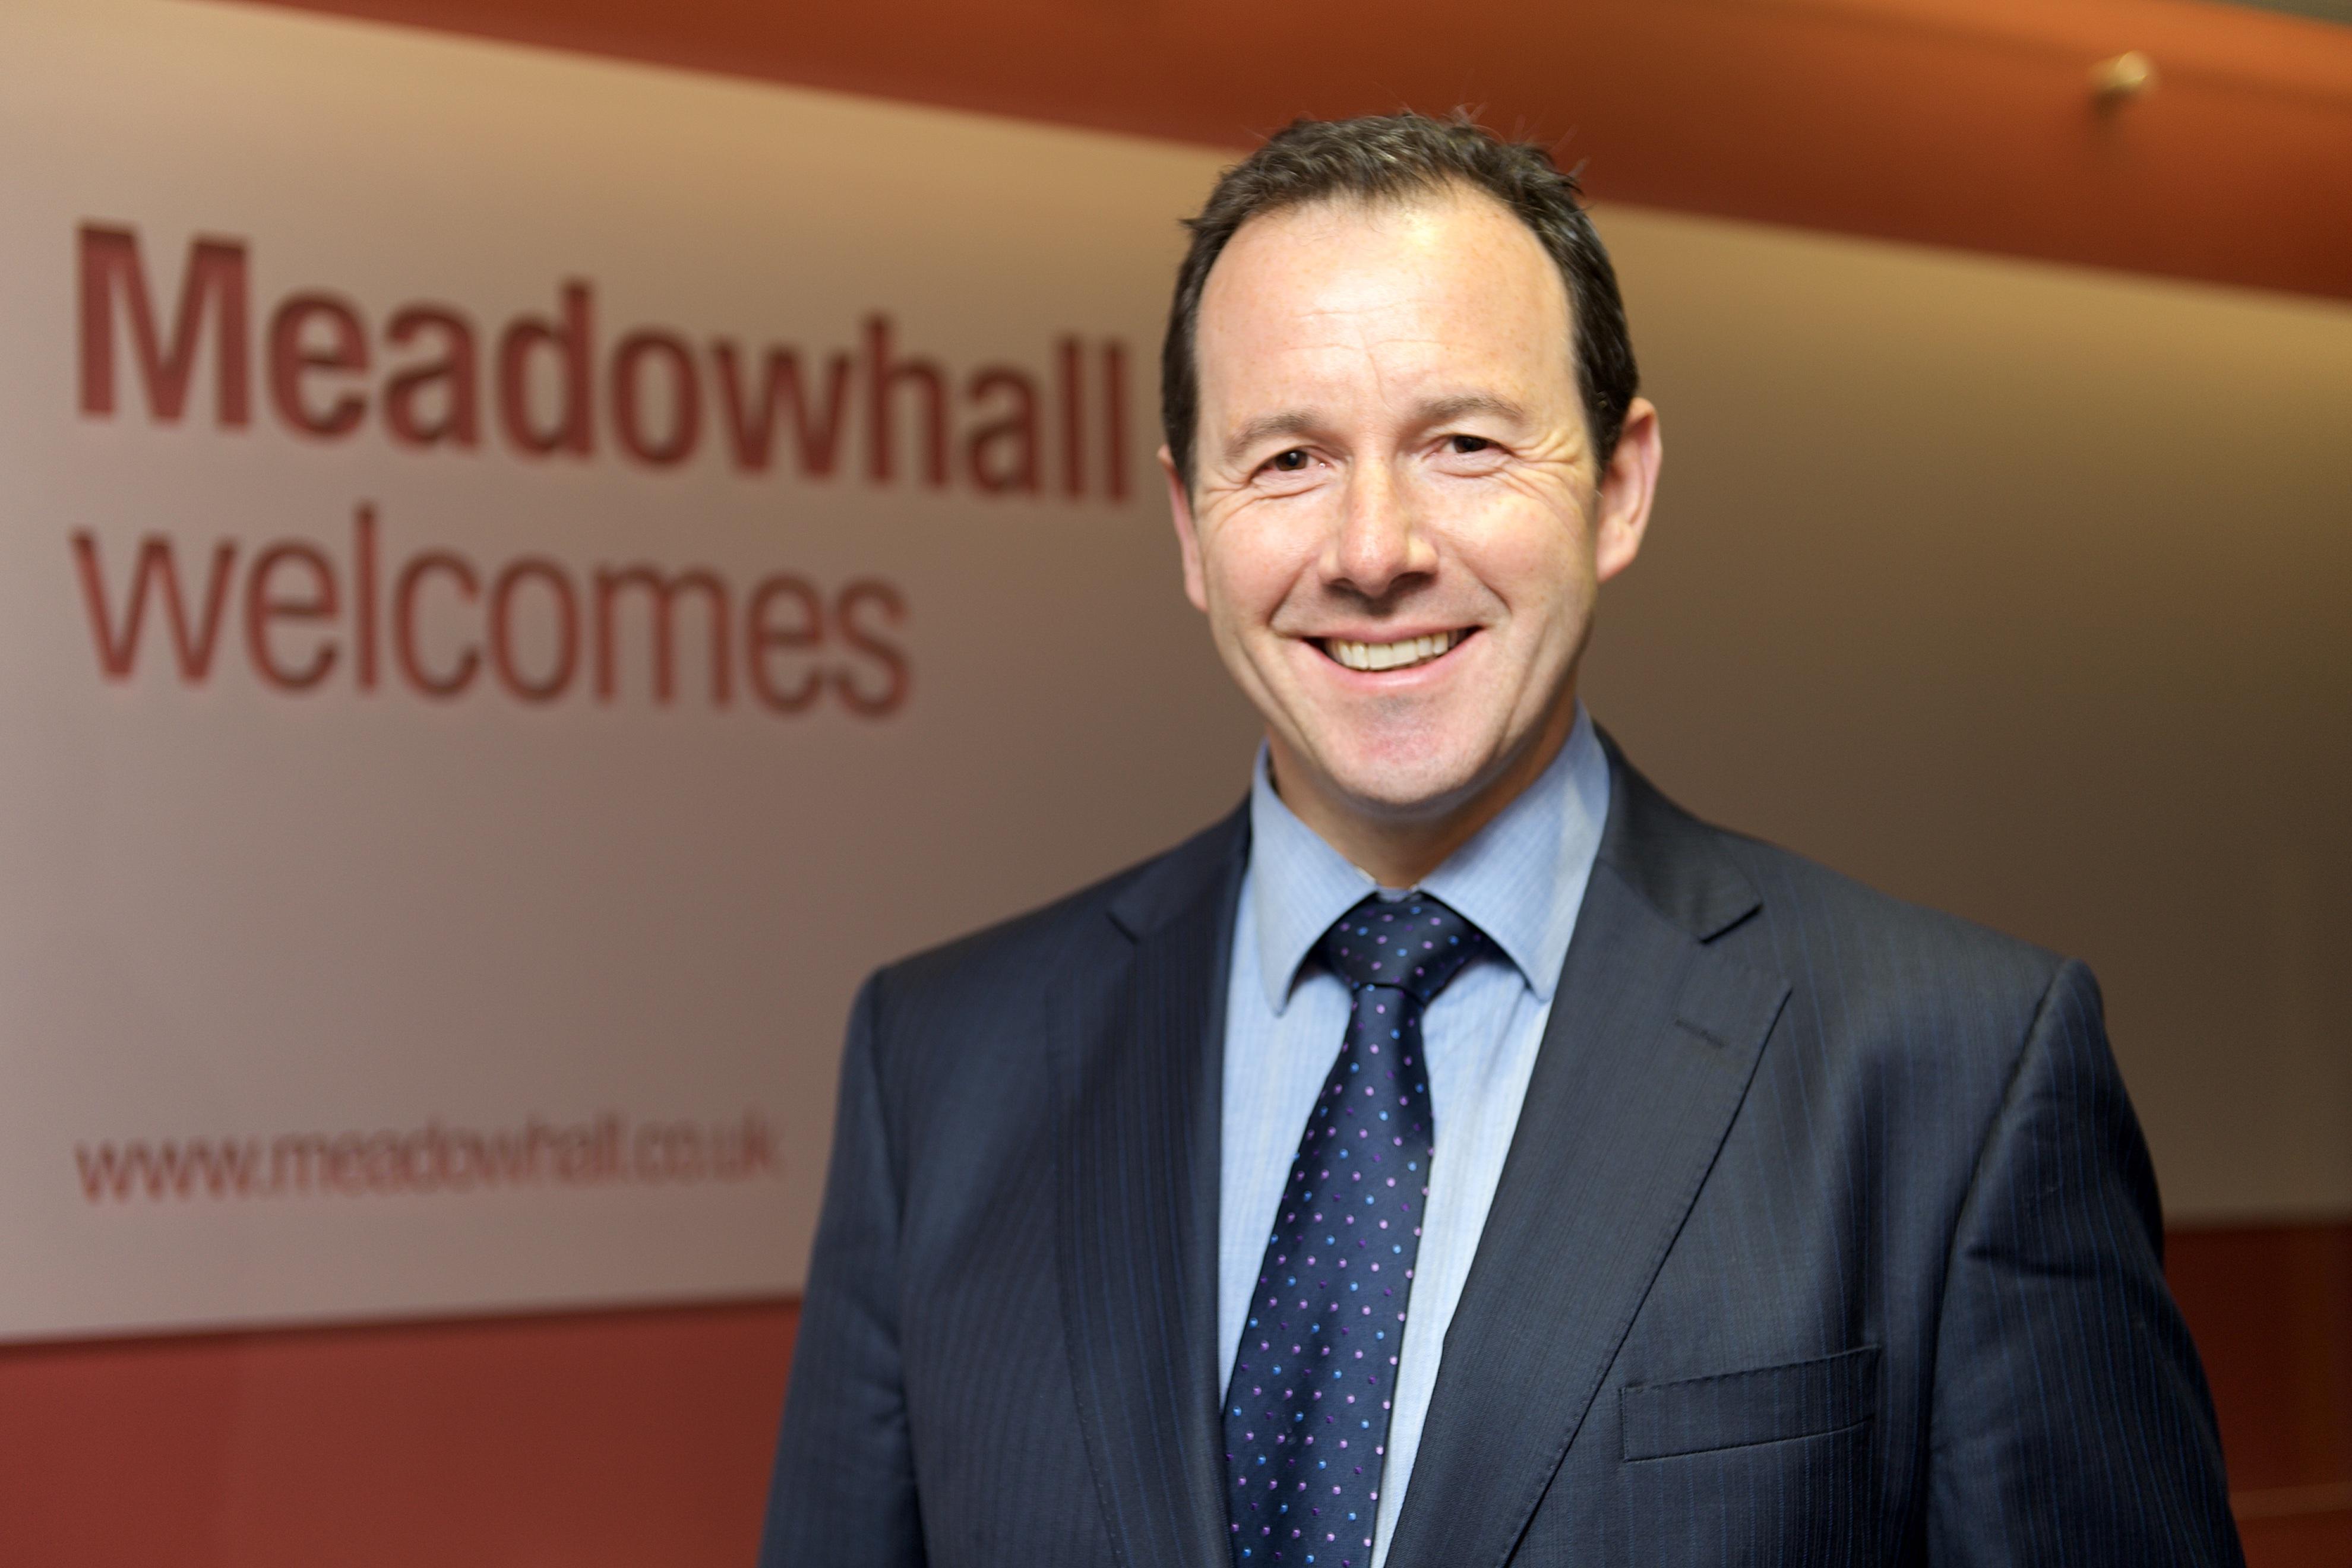 Meadowhall boss 'envious' of Sheffield 